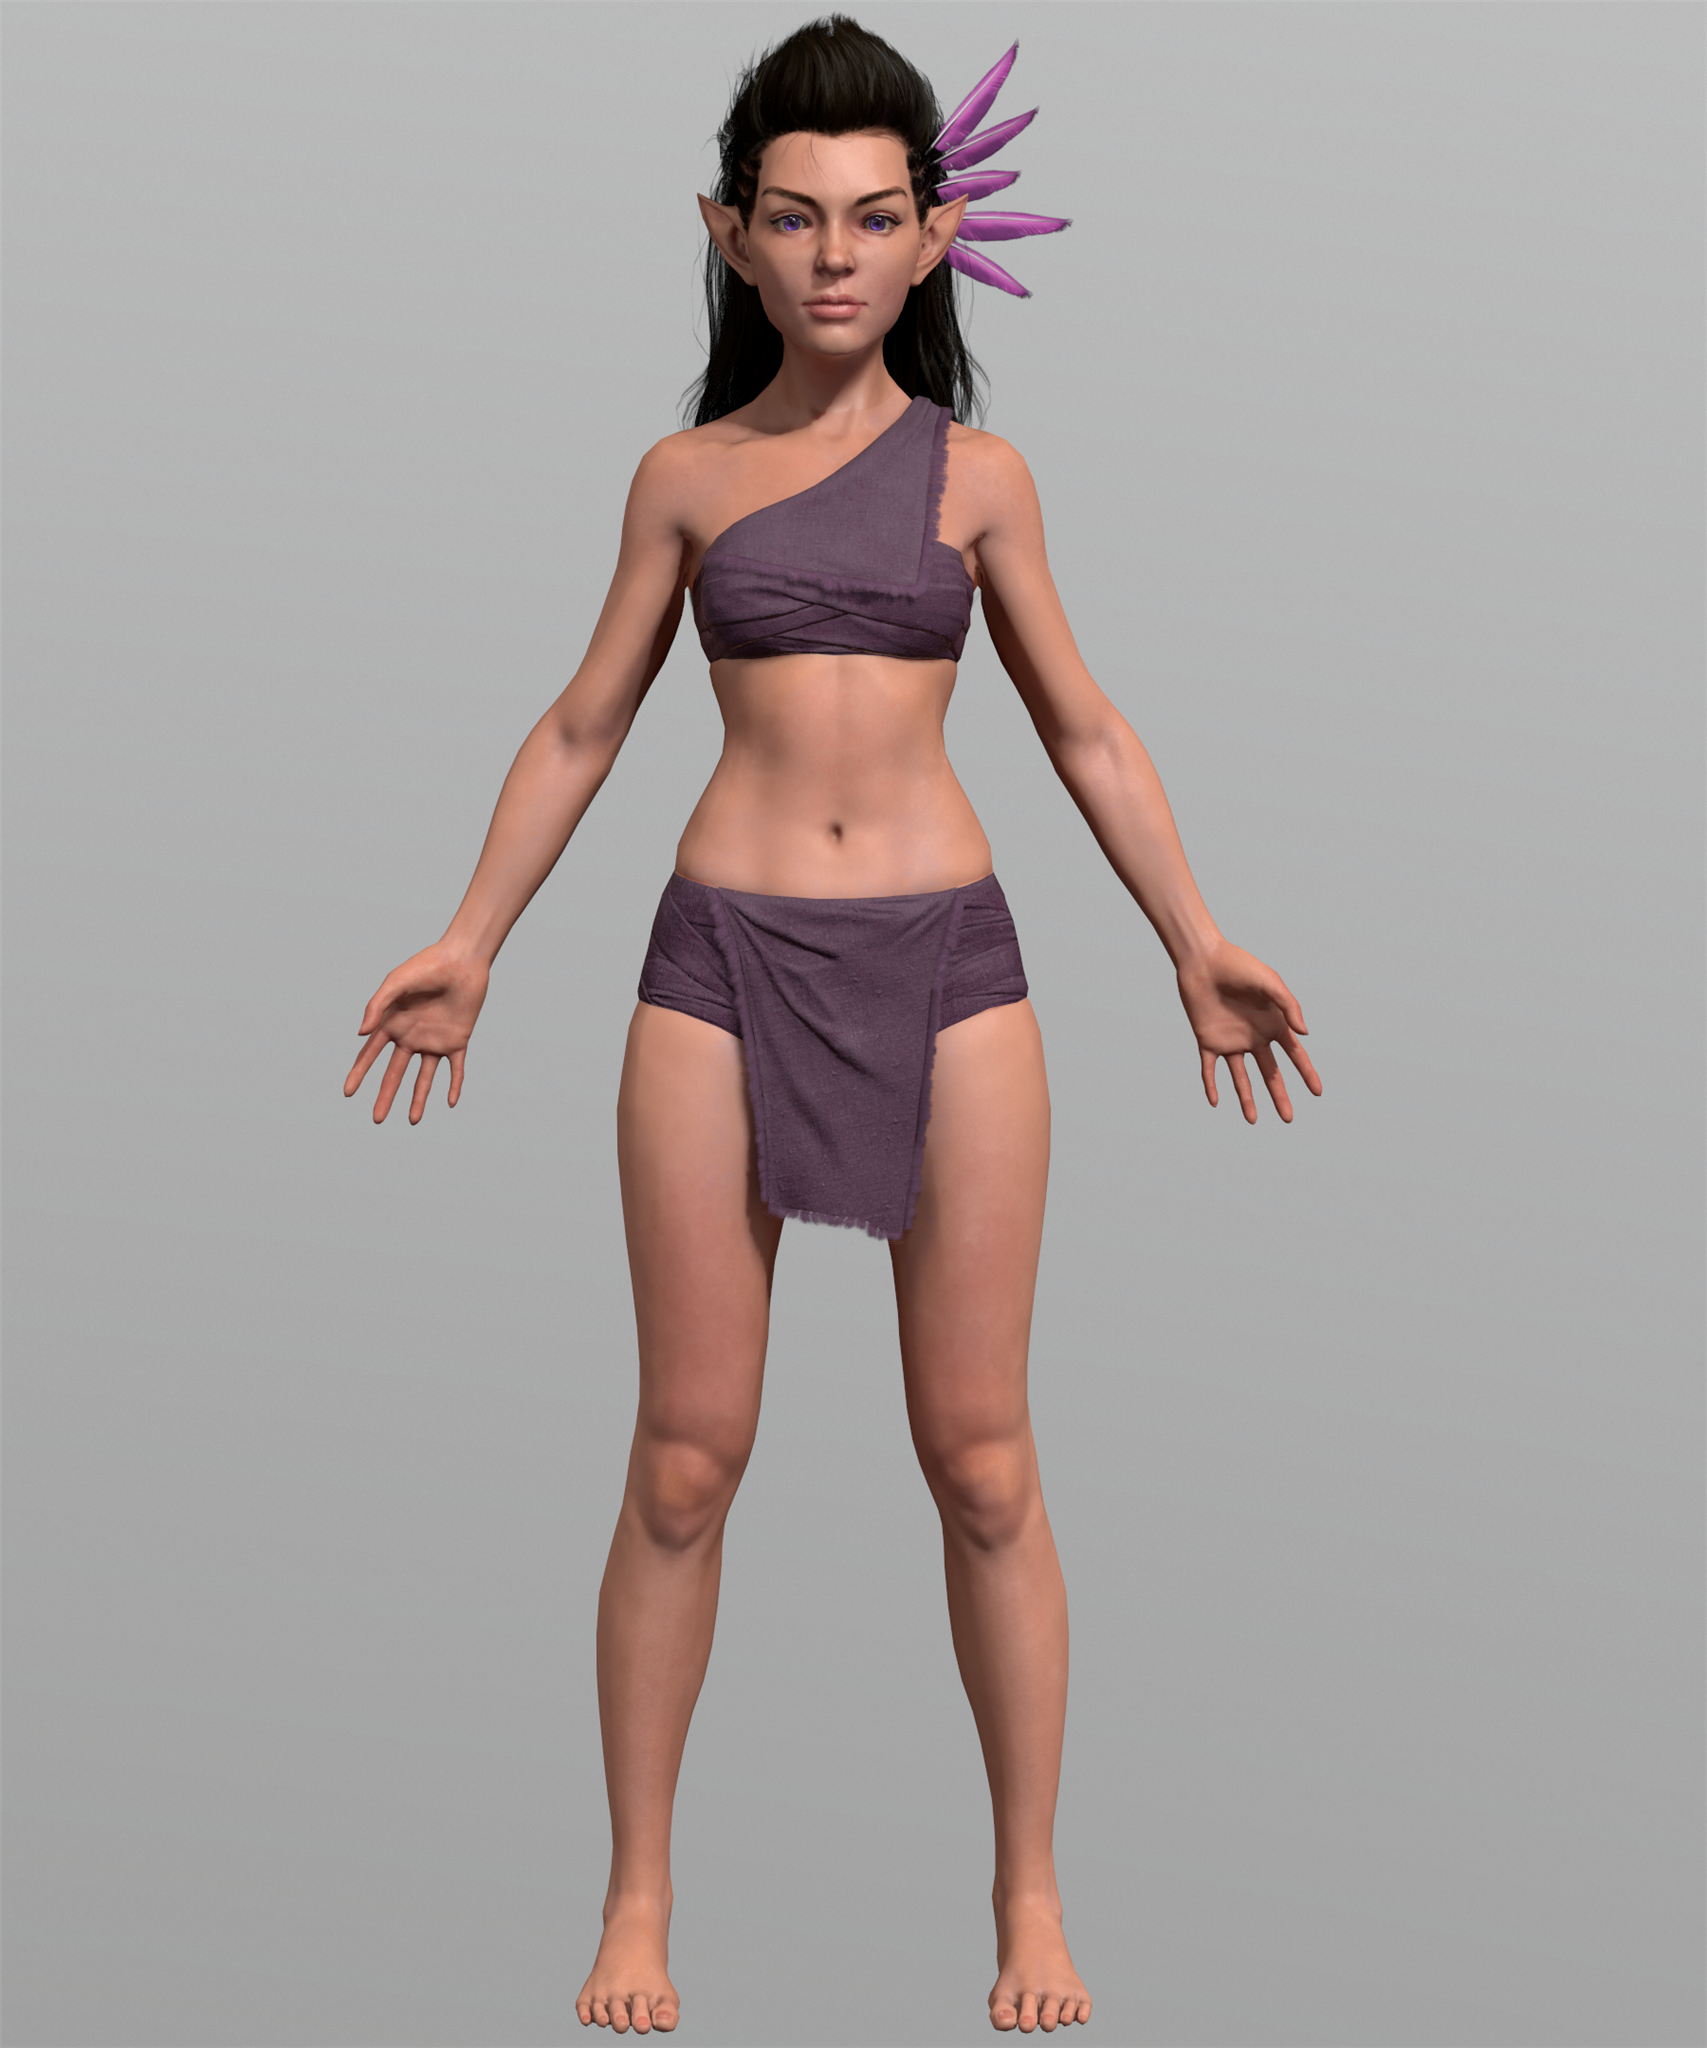 2018-Feb 14: render of Halfling character model